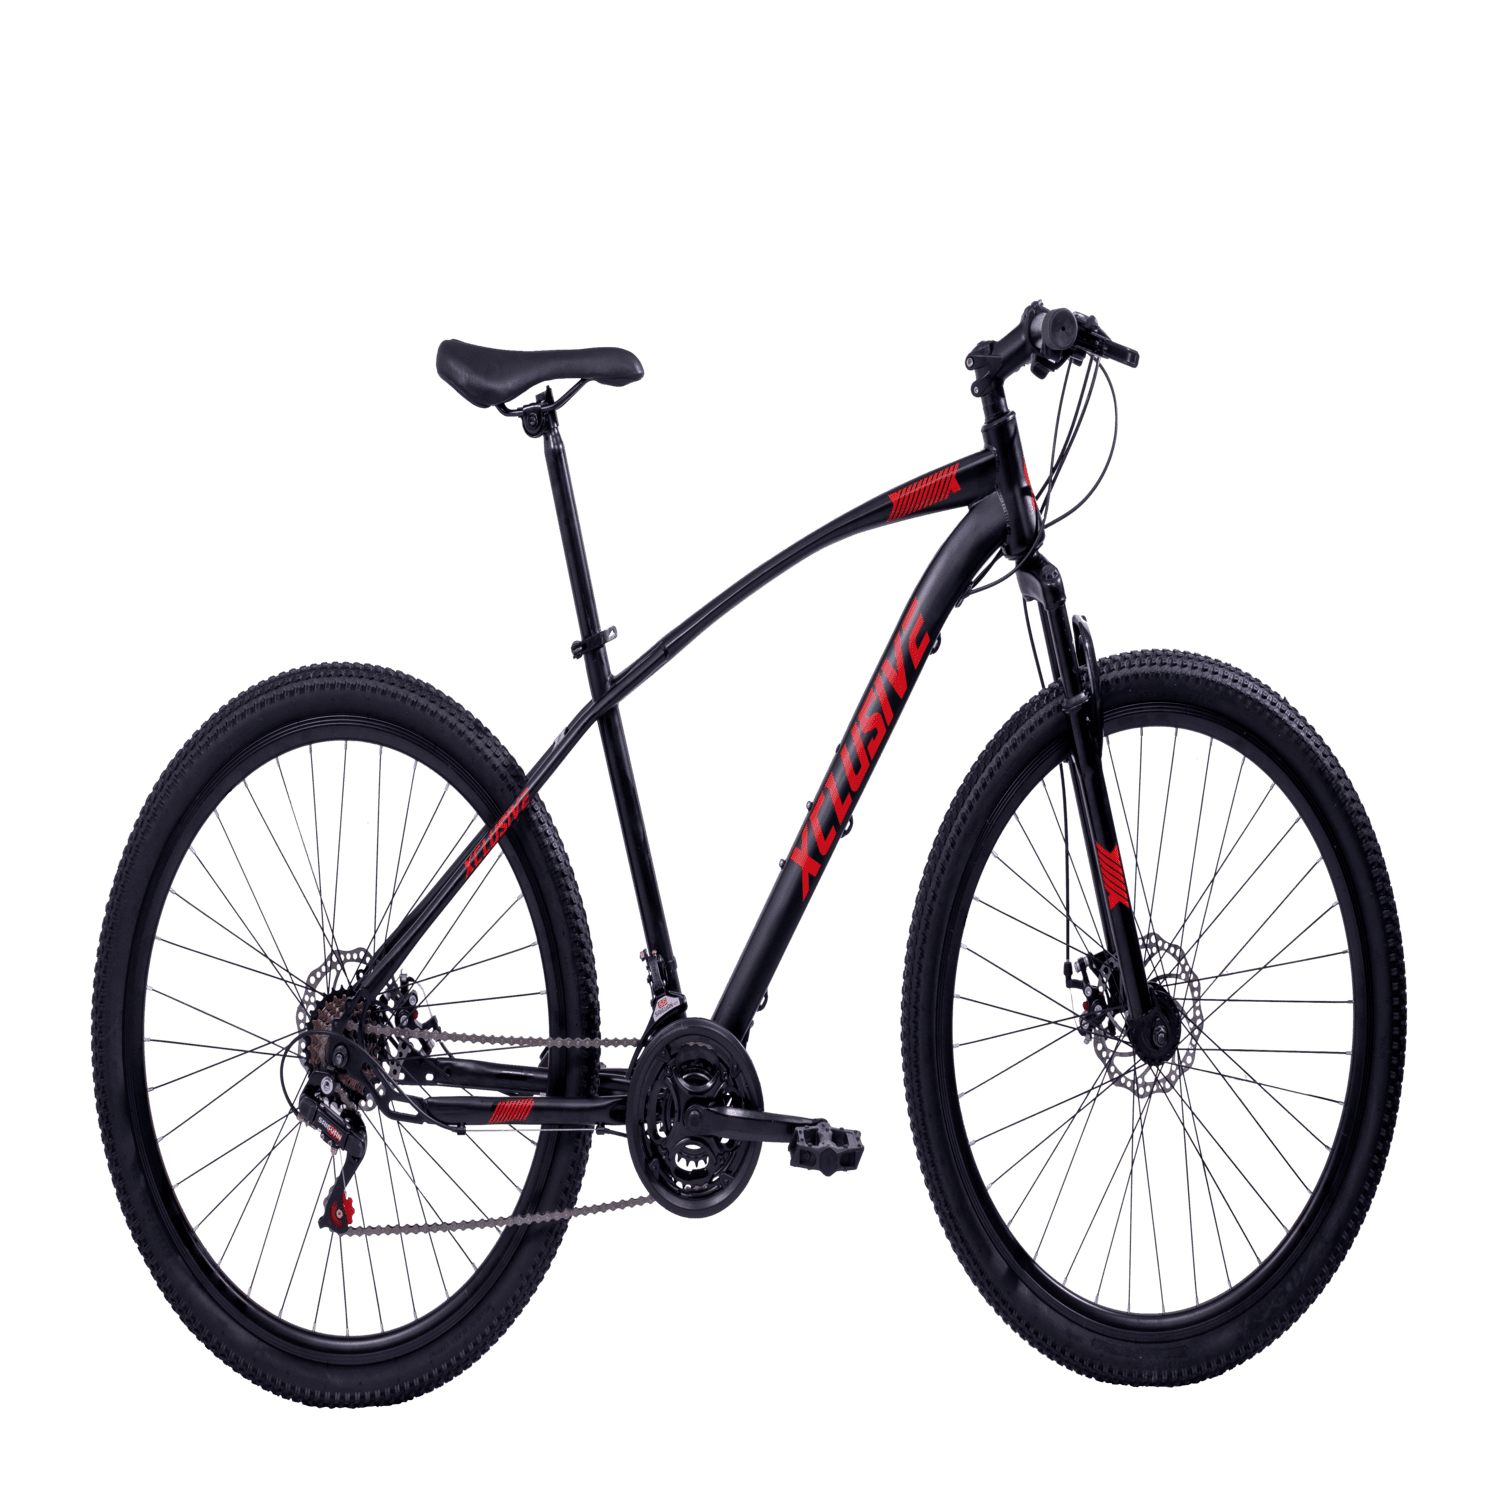 Luz Delantera Xclusive para Bicicleta 4 en 1 Rojo - Promart